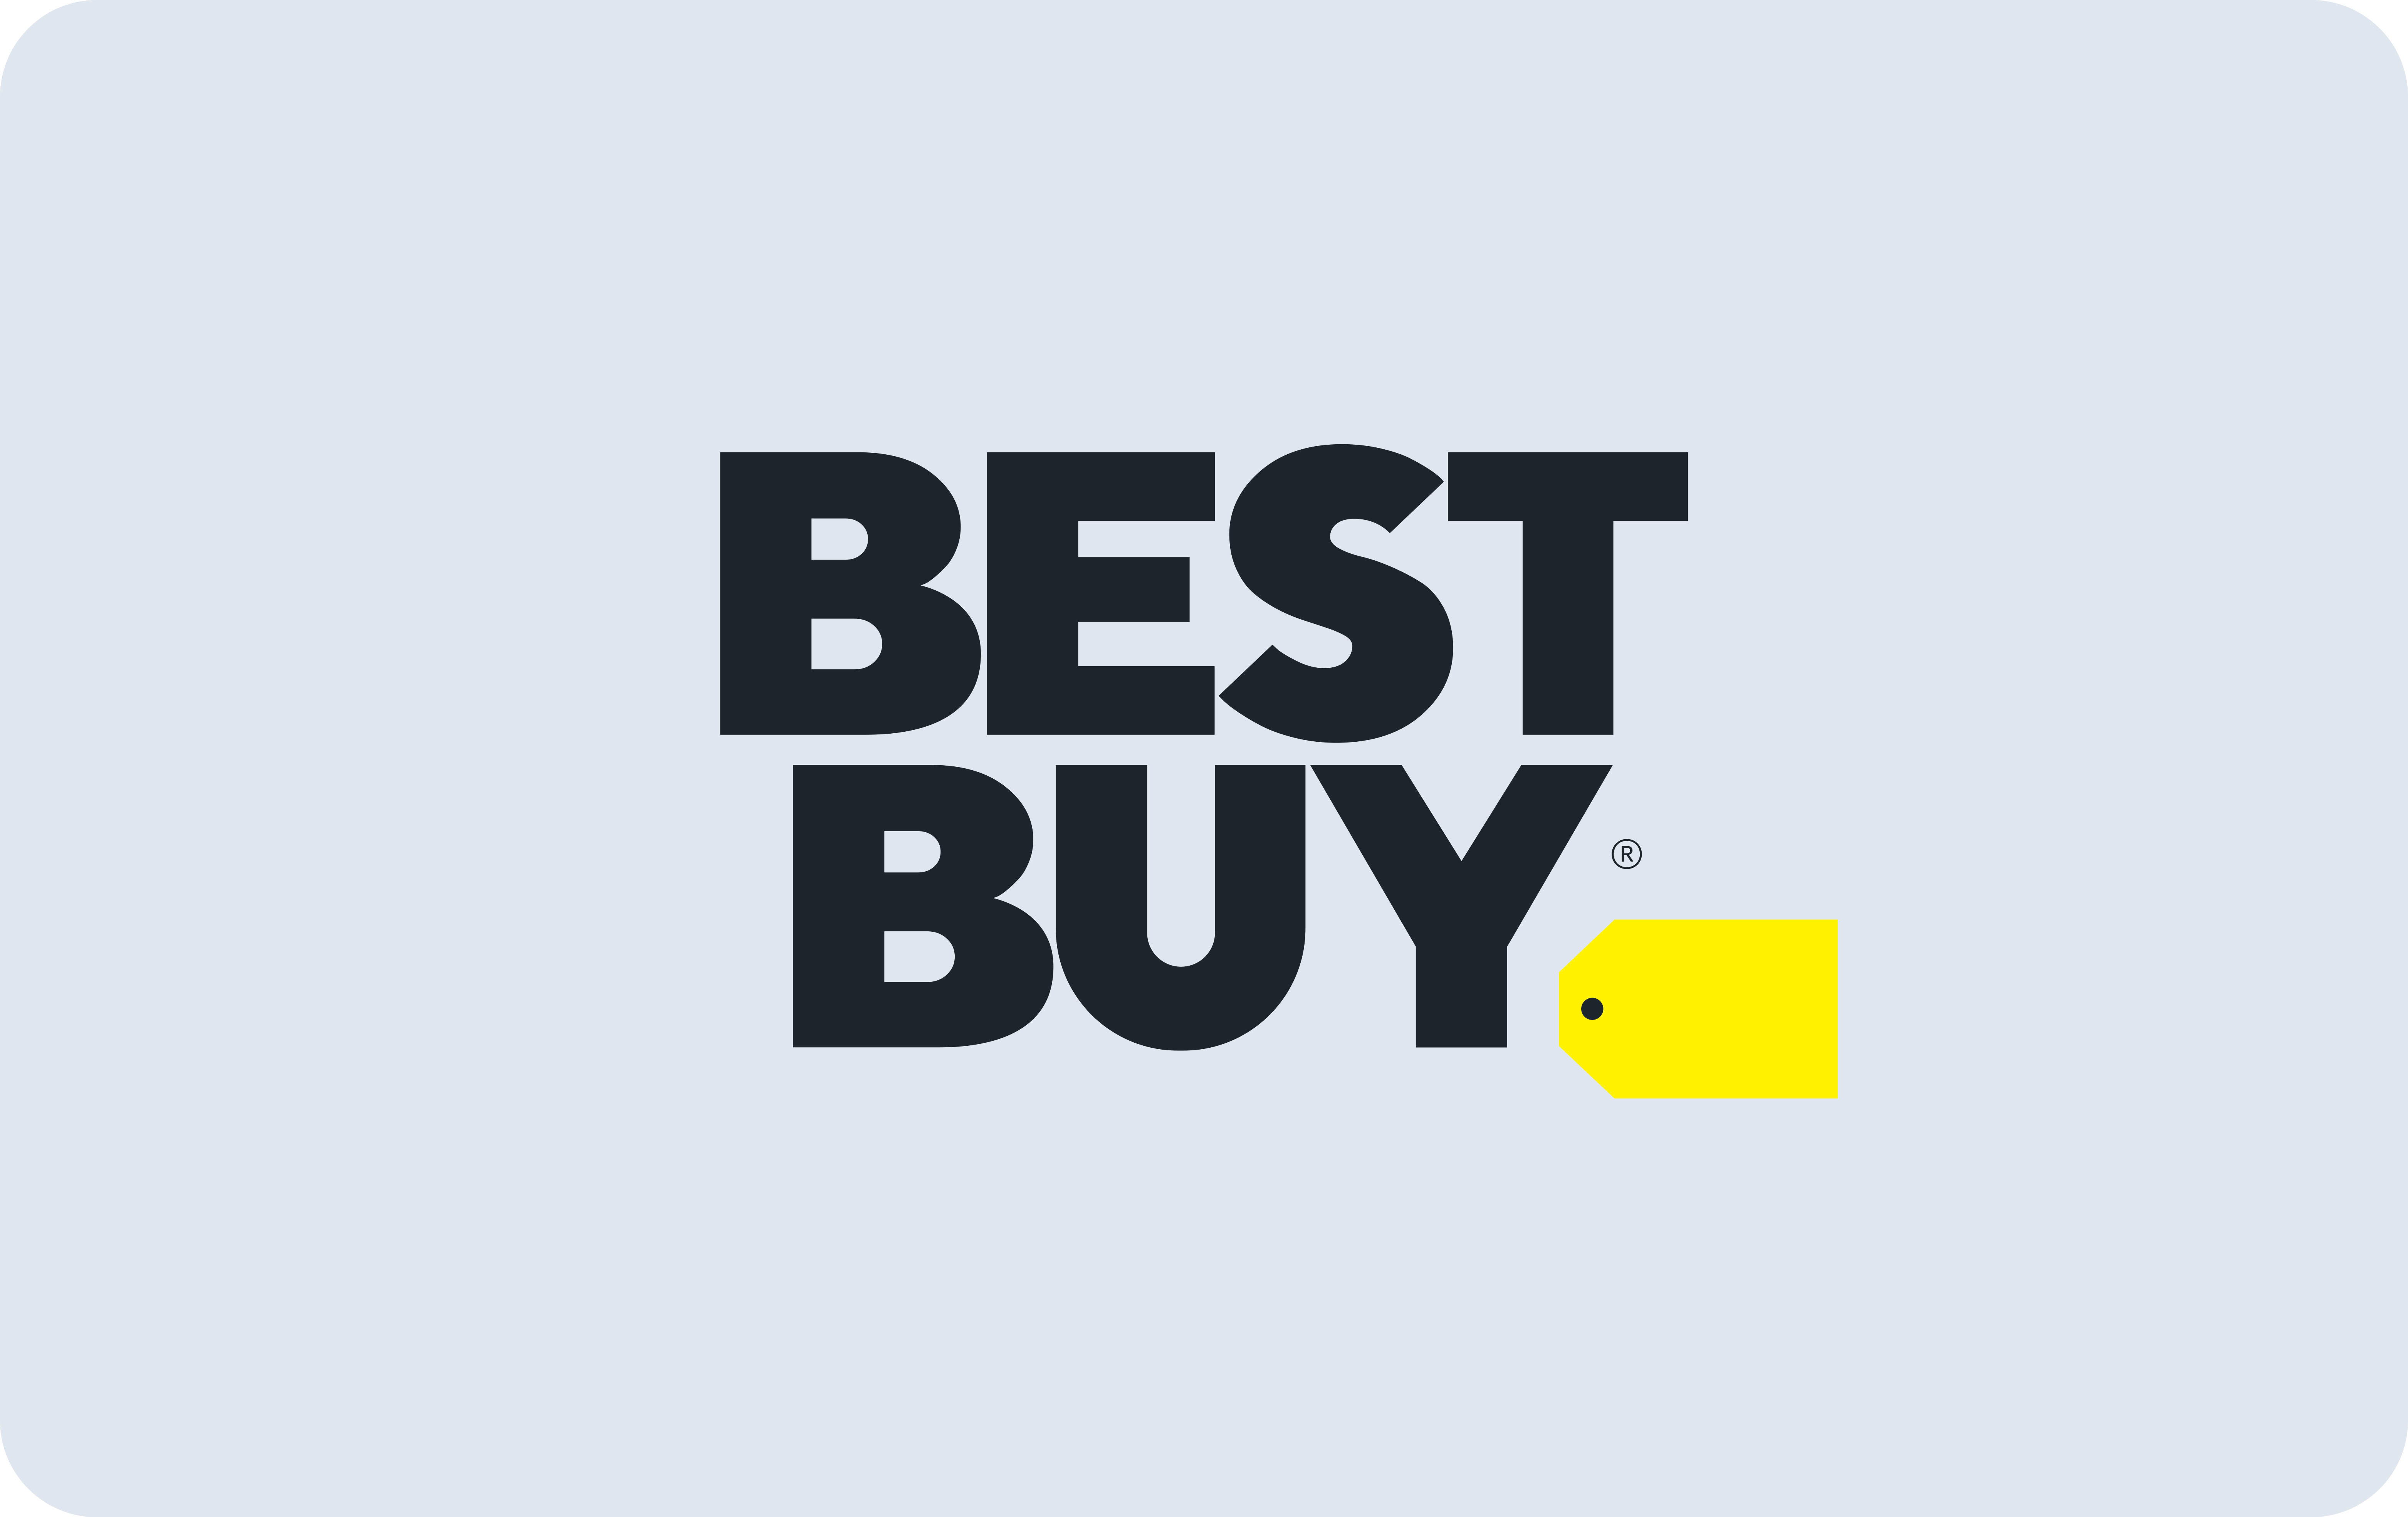 Best Buy® $25 Best Buy White Gift Card 6491893 - Best Buy